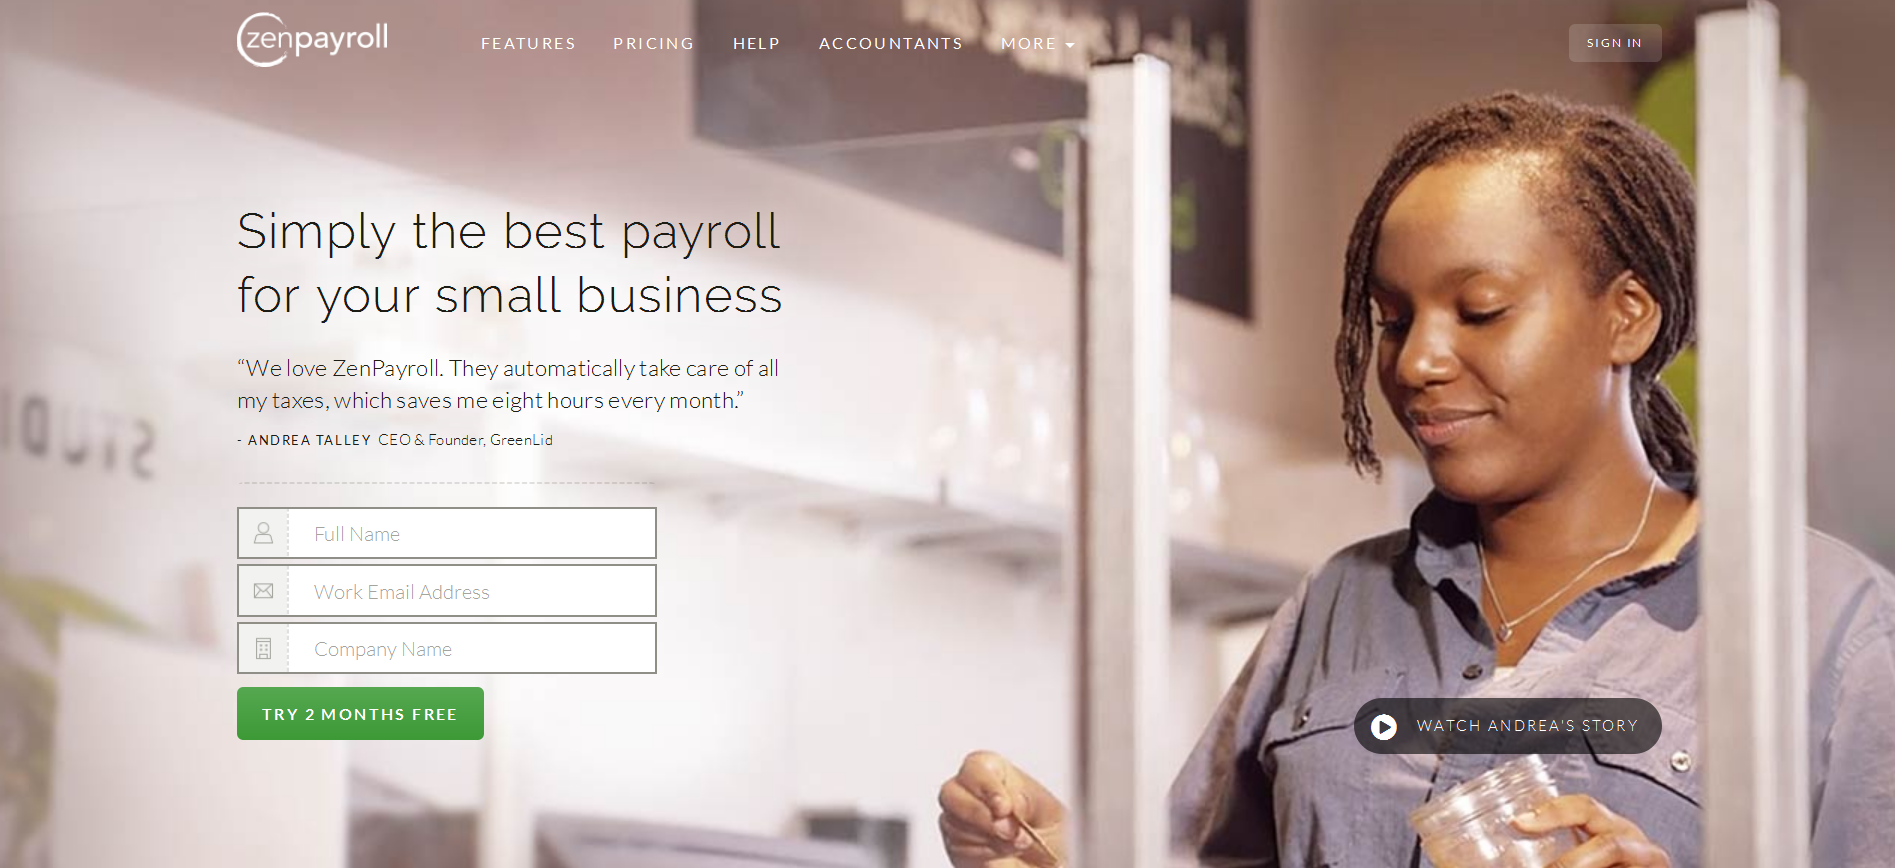 ZenPayroll startup solves the problem of payrolling